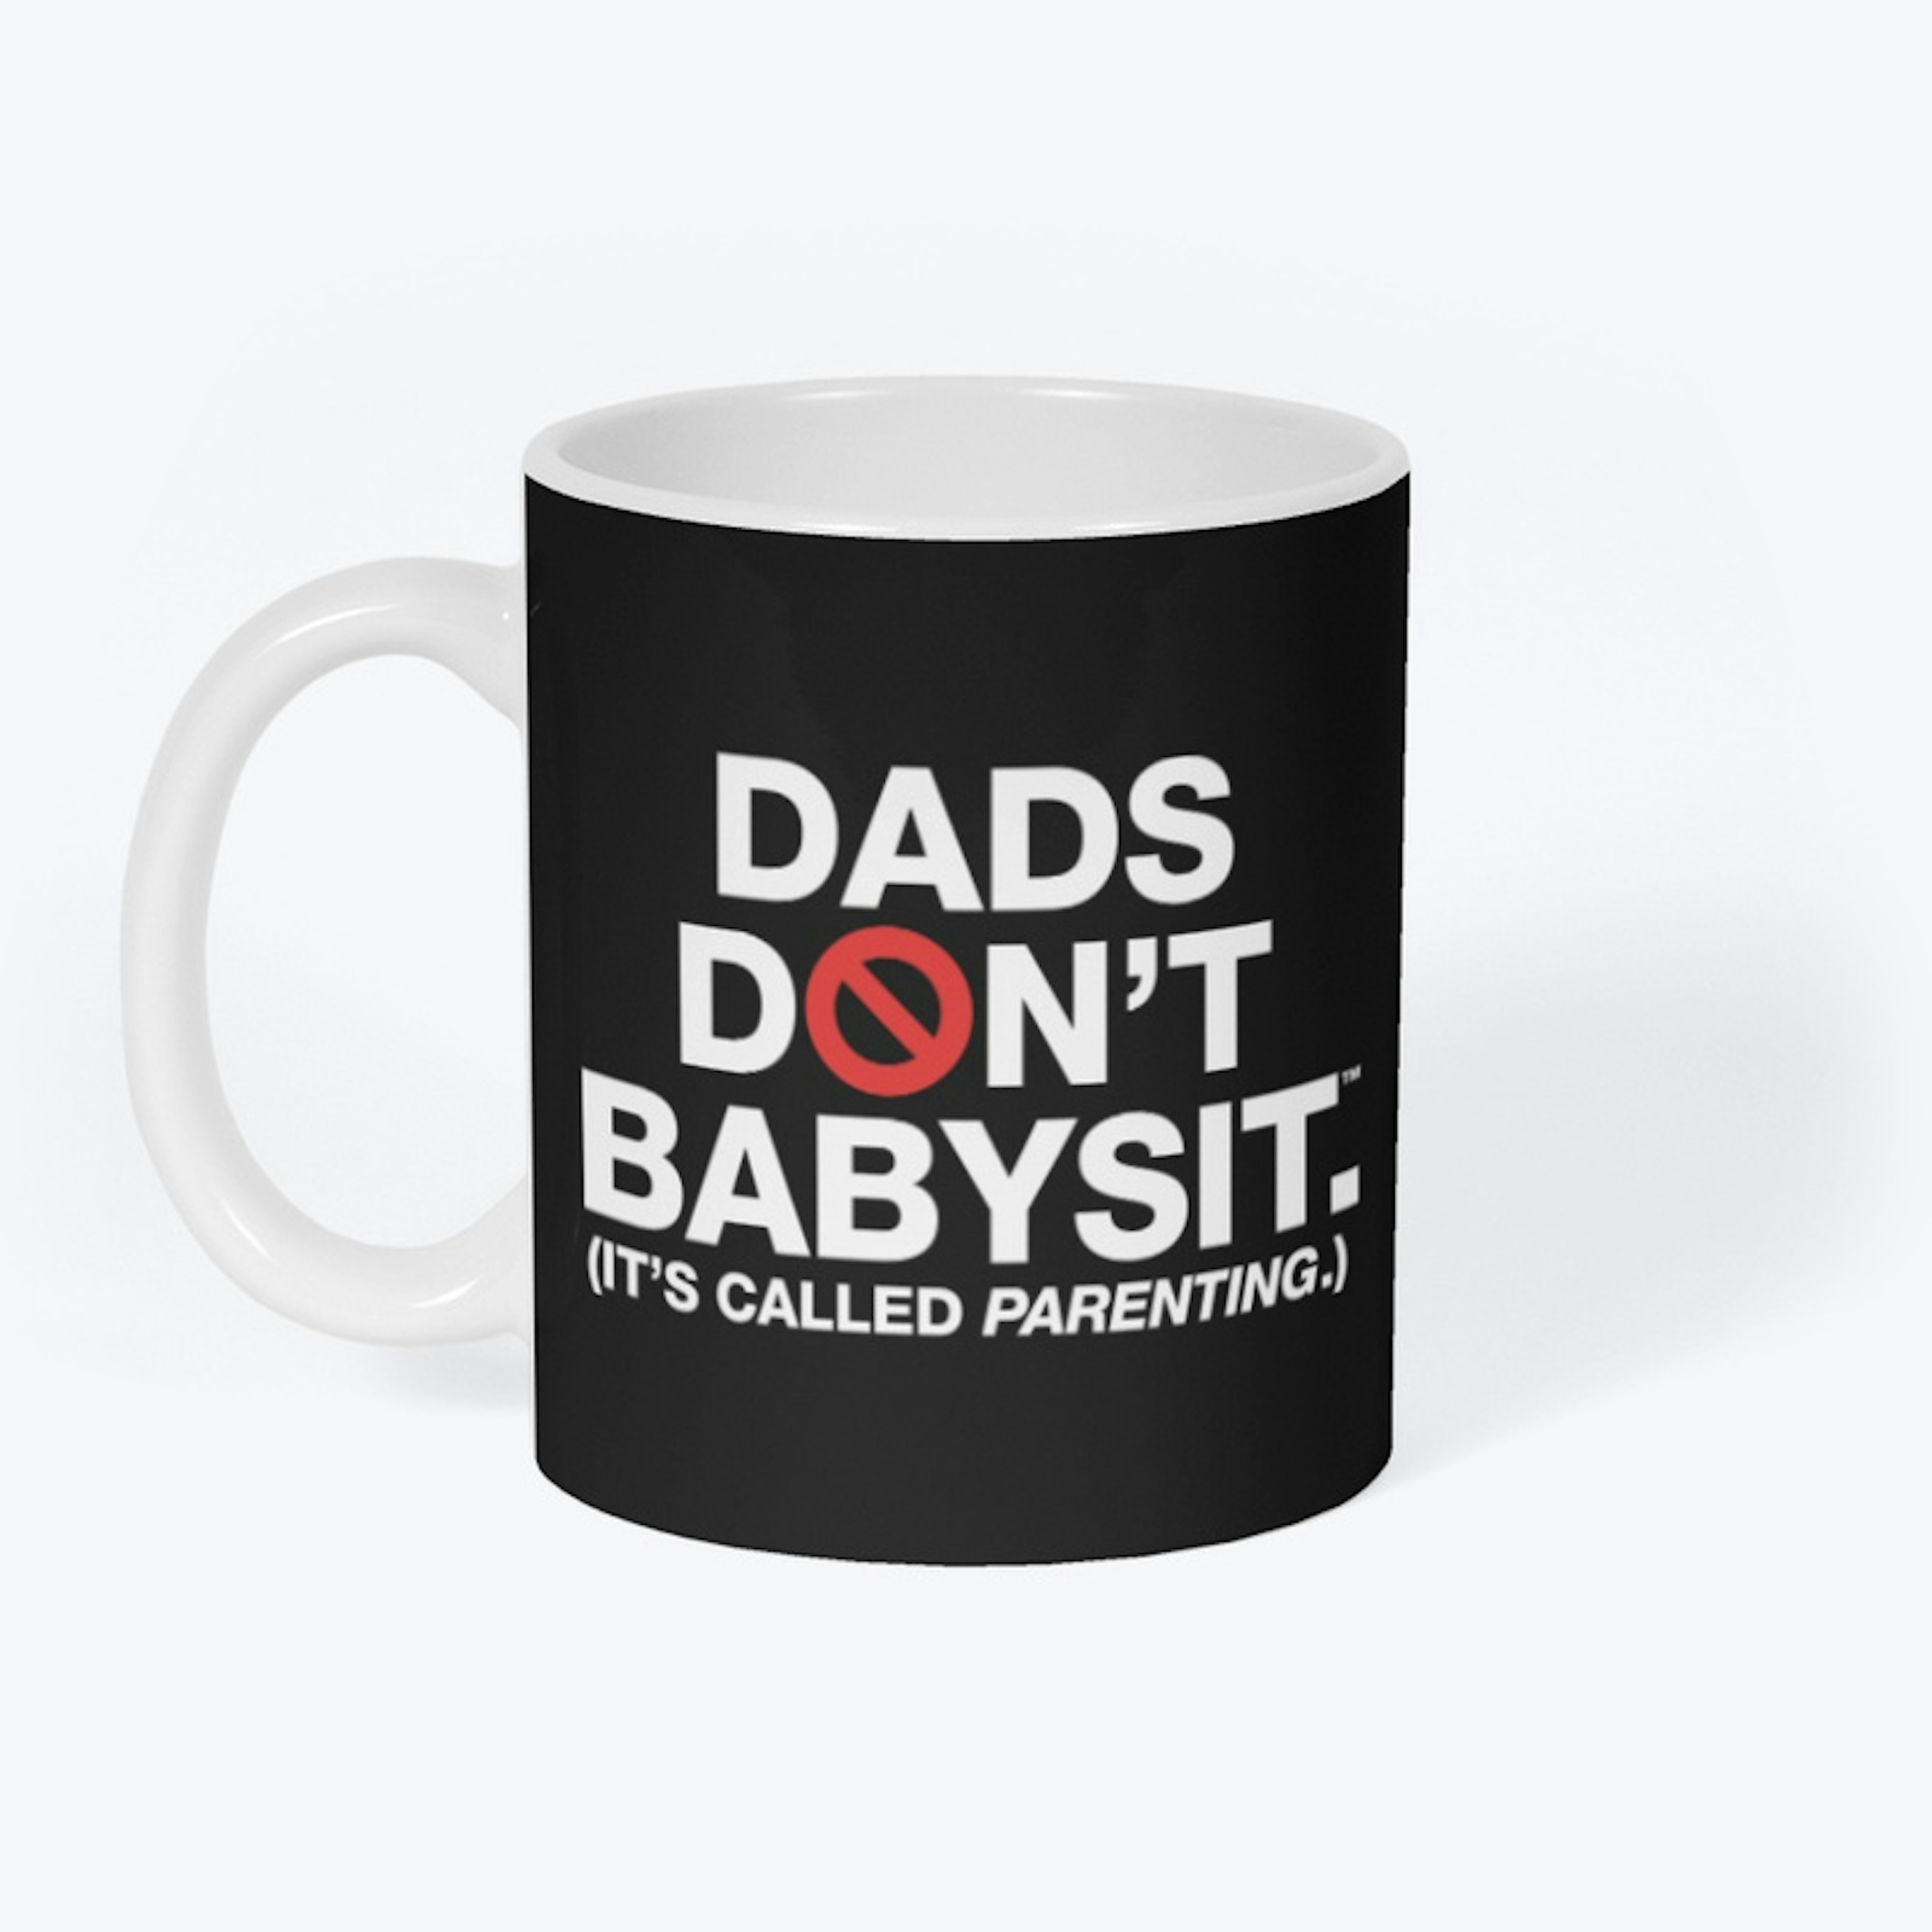 The Dads Don't Babysit™ Mug!